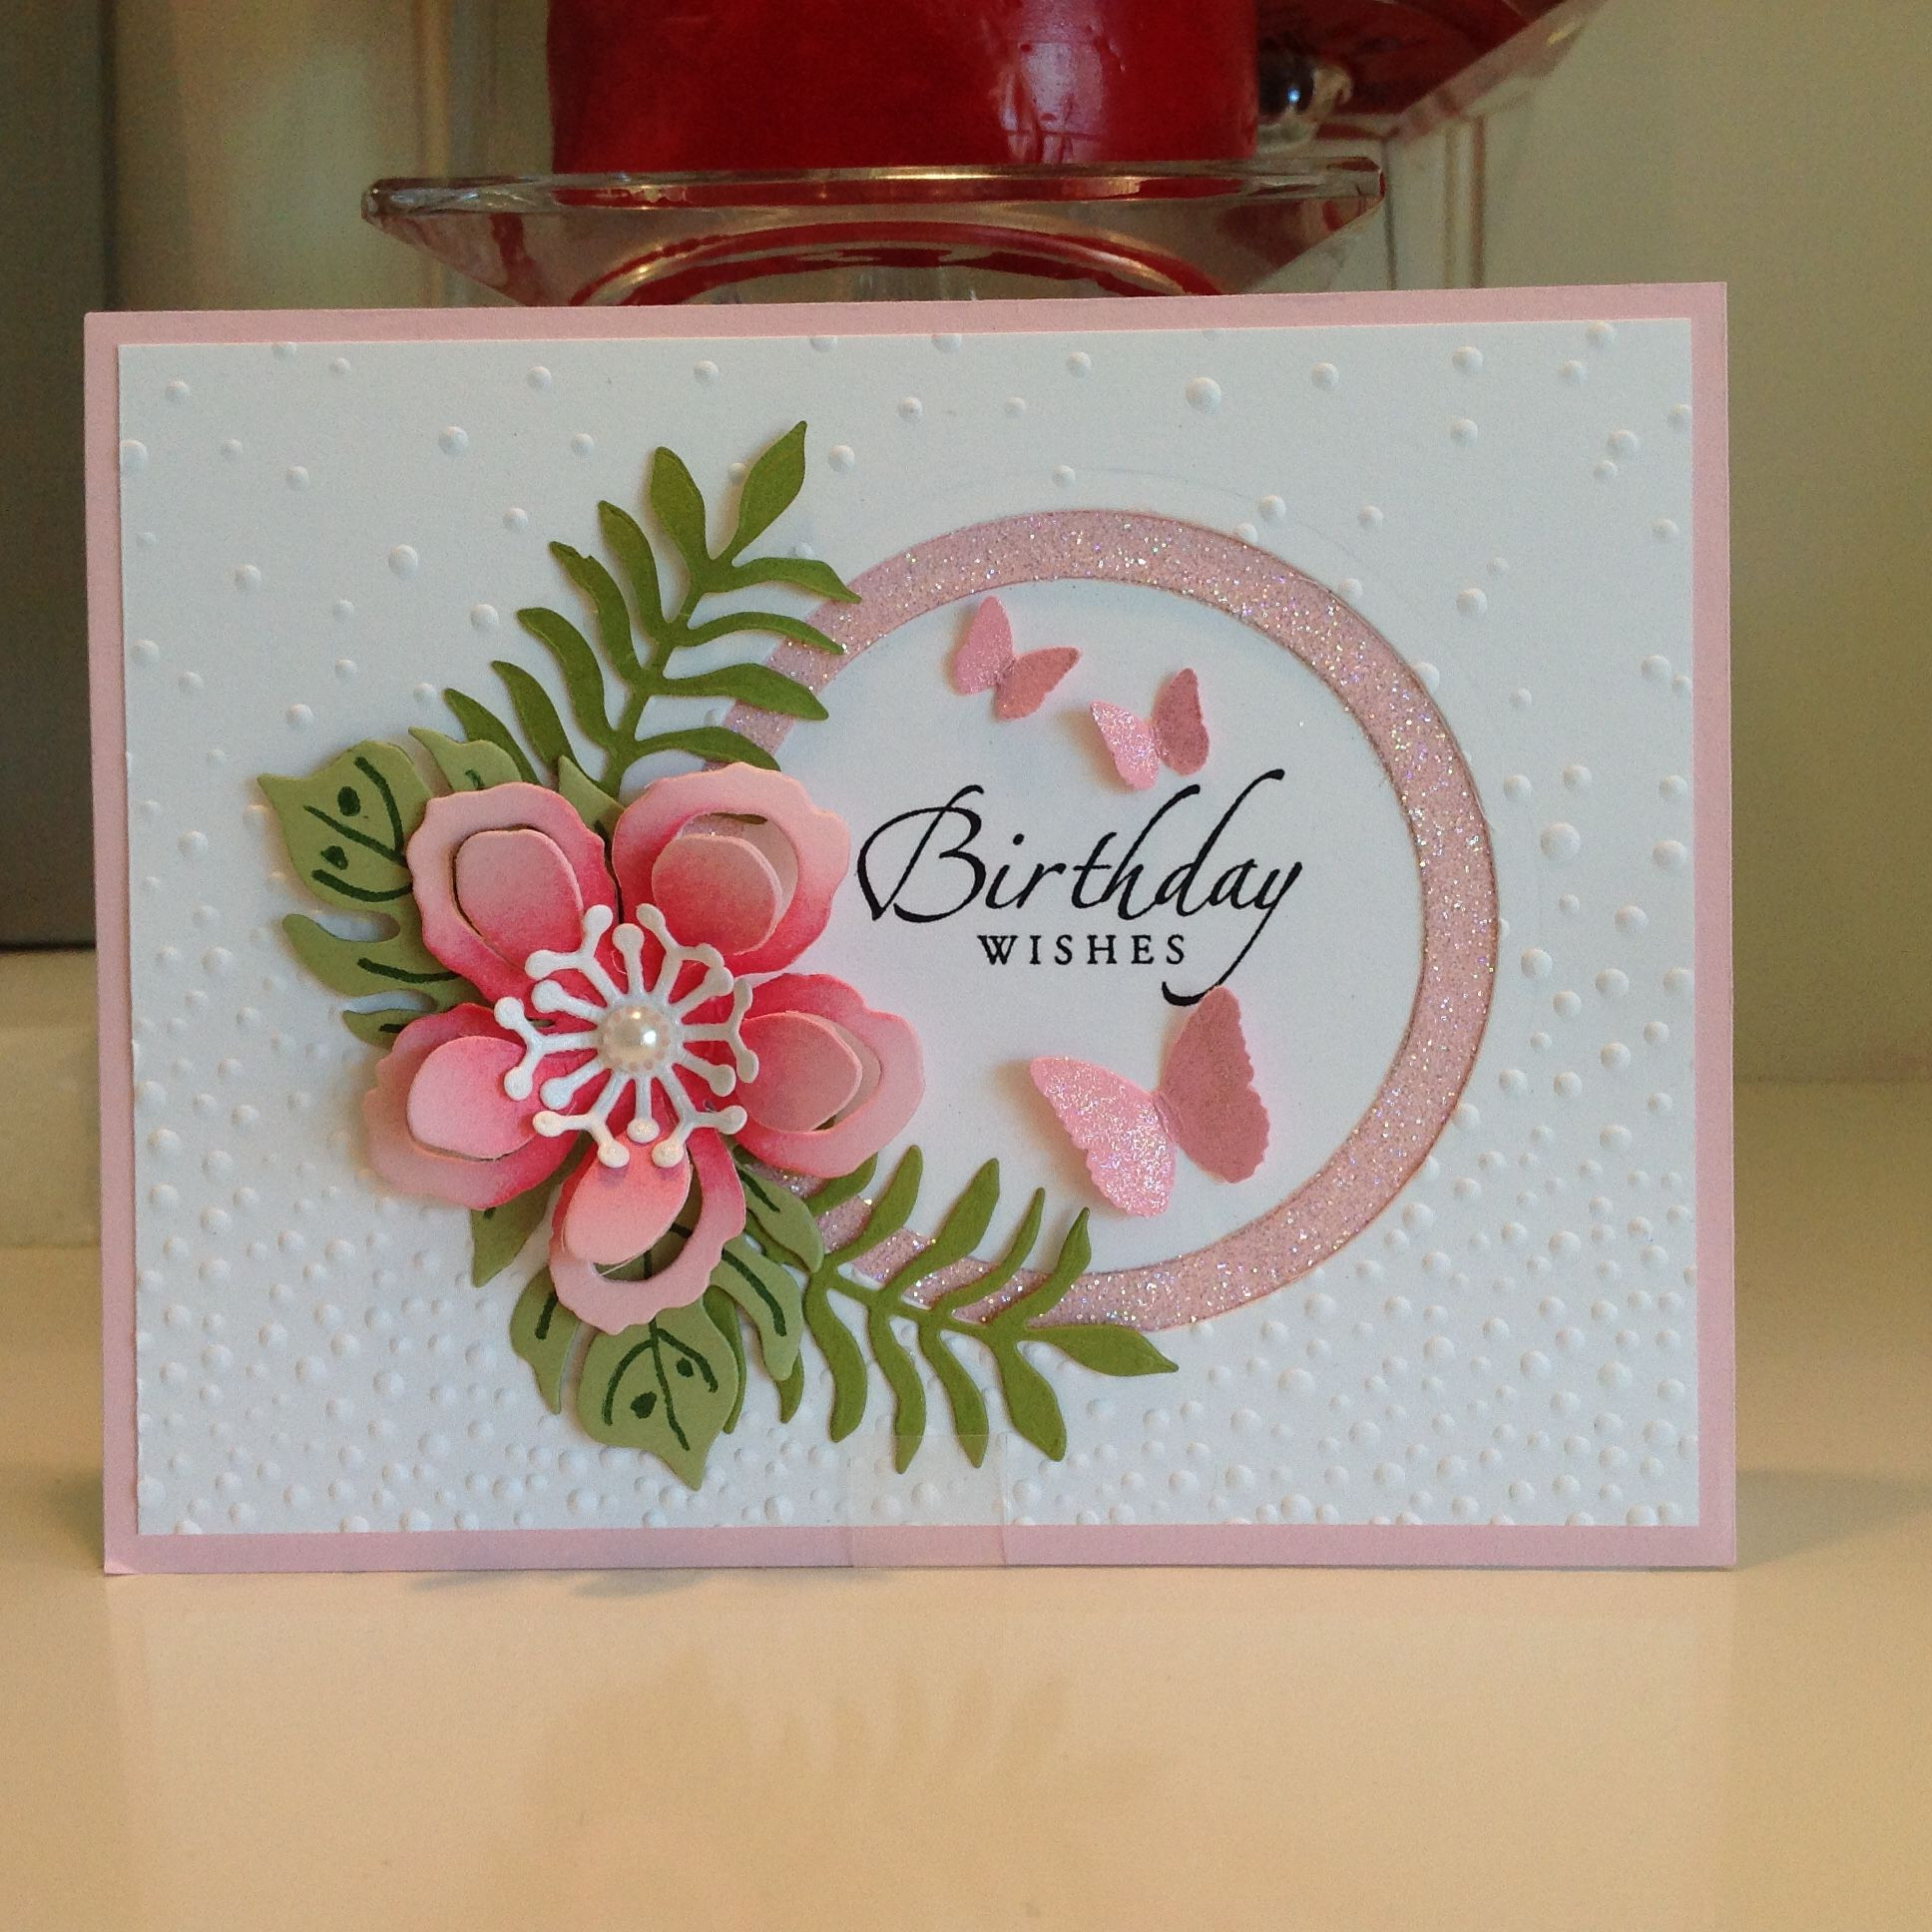 Stampin Up Birthday Cards Ideas Birthday Cards Ideas 8 Cool And Amazing Birthday Card Ideas Dozor